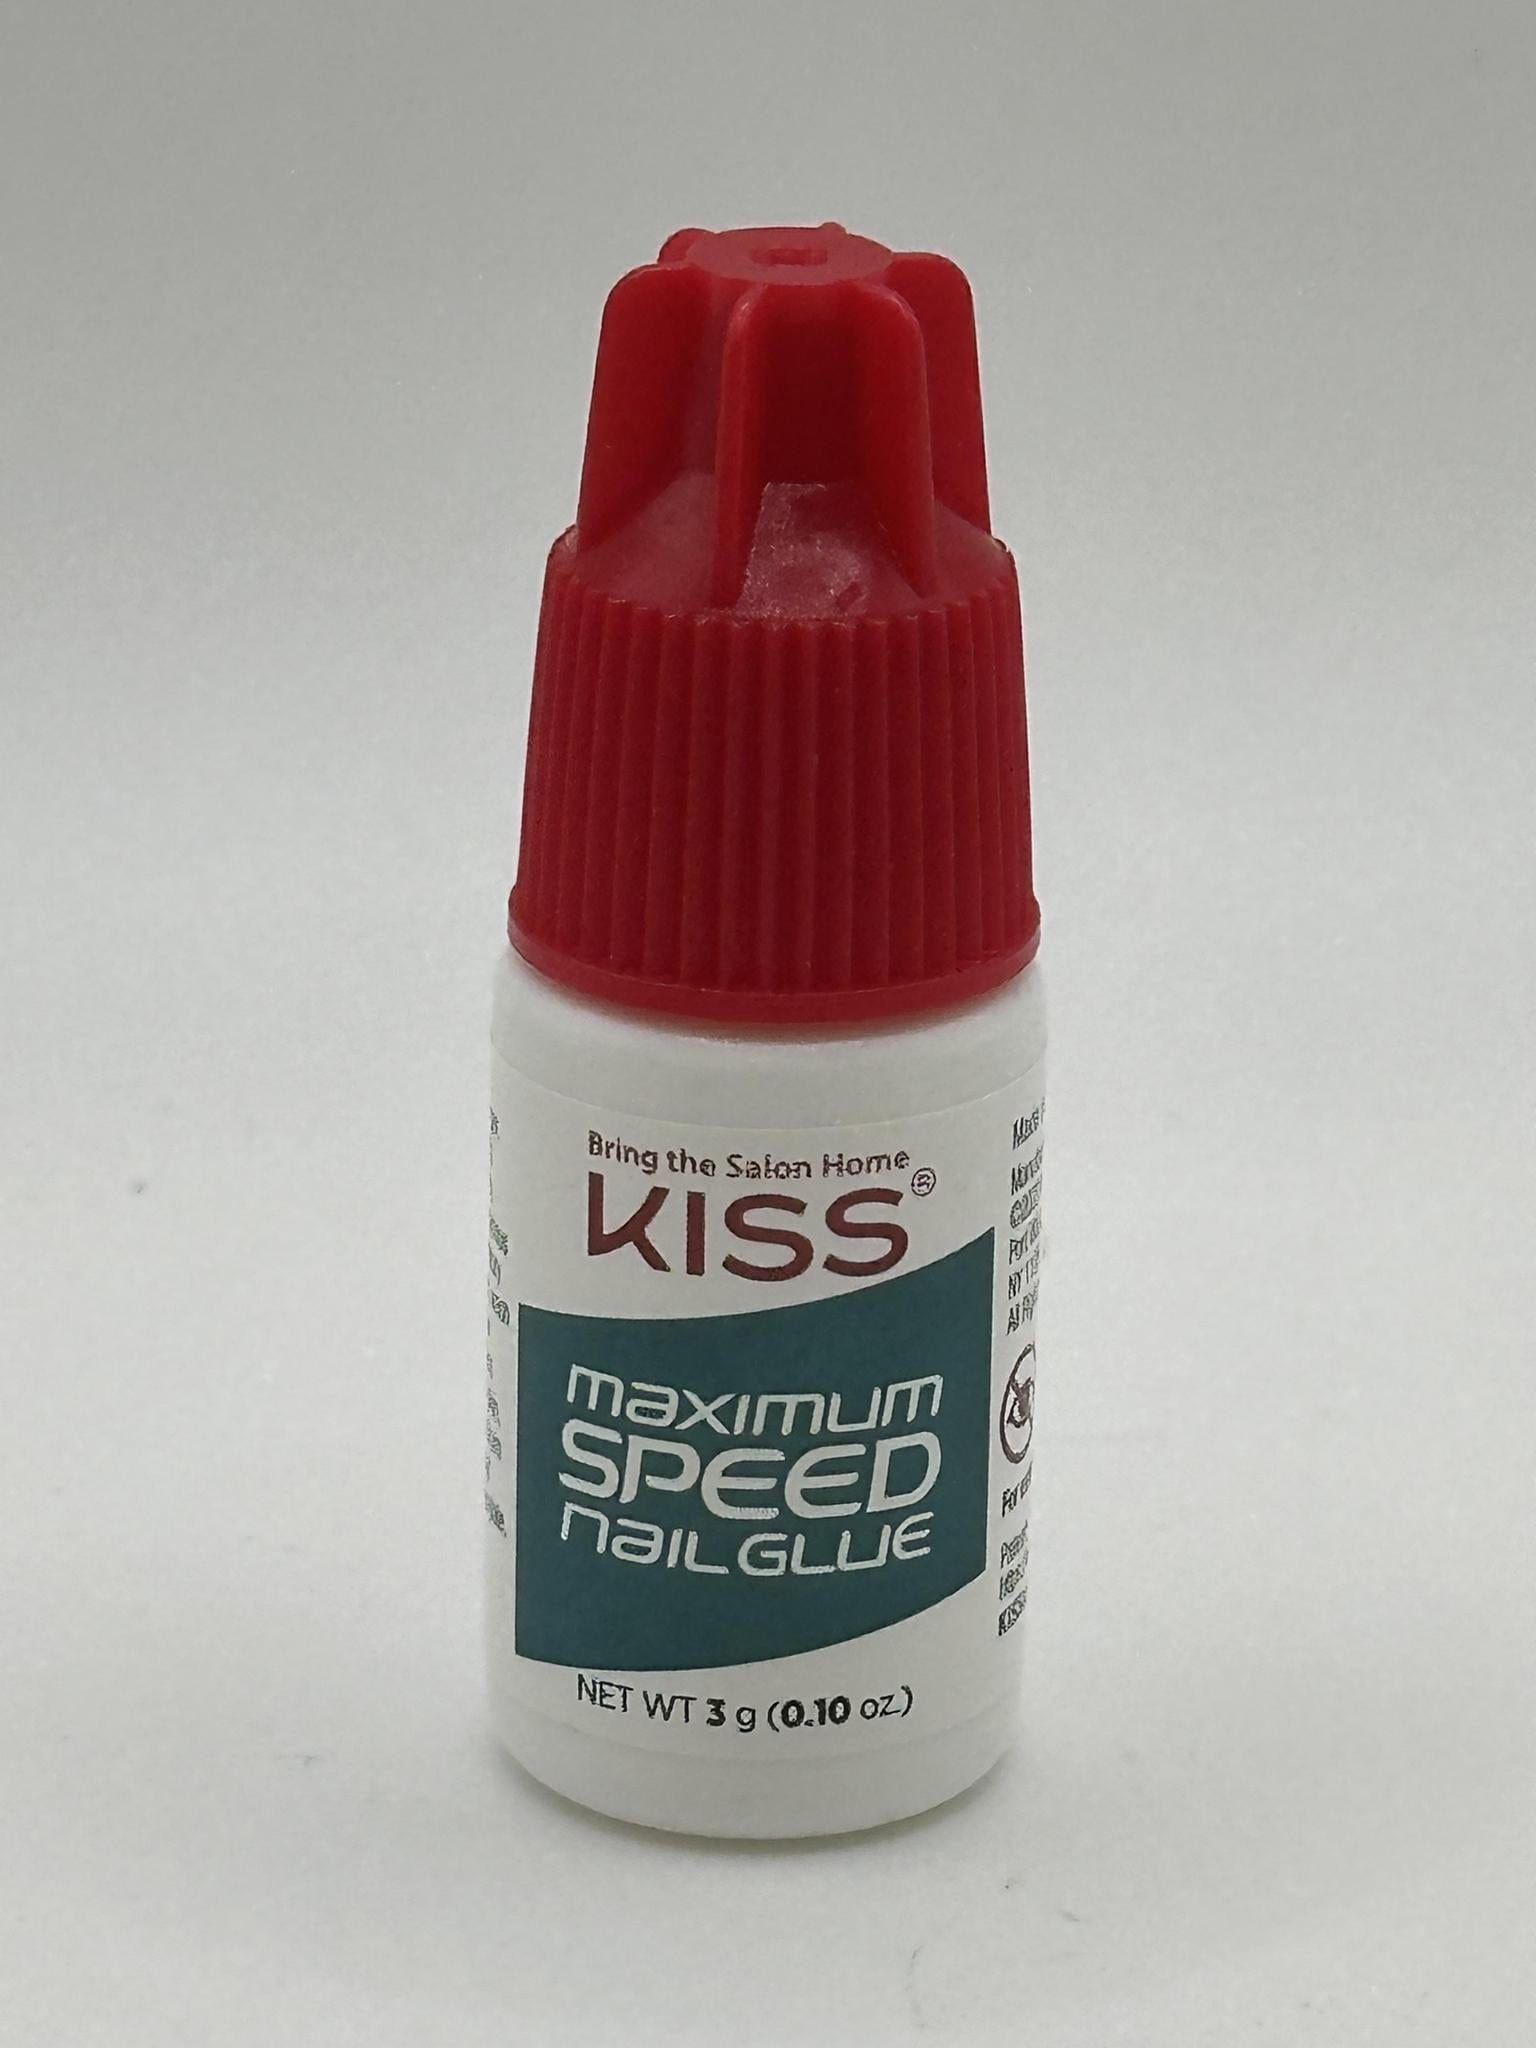 KISS MAXIMUM SPEED NAIL GLUE 3g (0.10 oz.) ***NO BLISTER PACK PACKAGING***